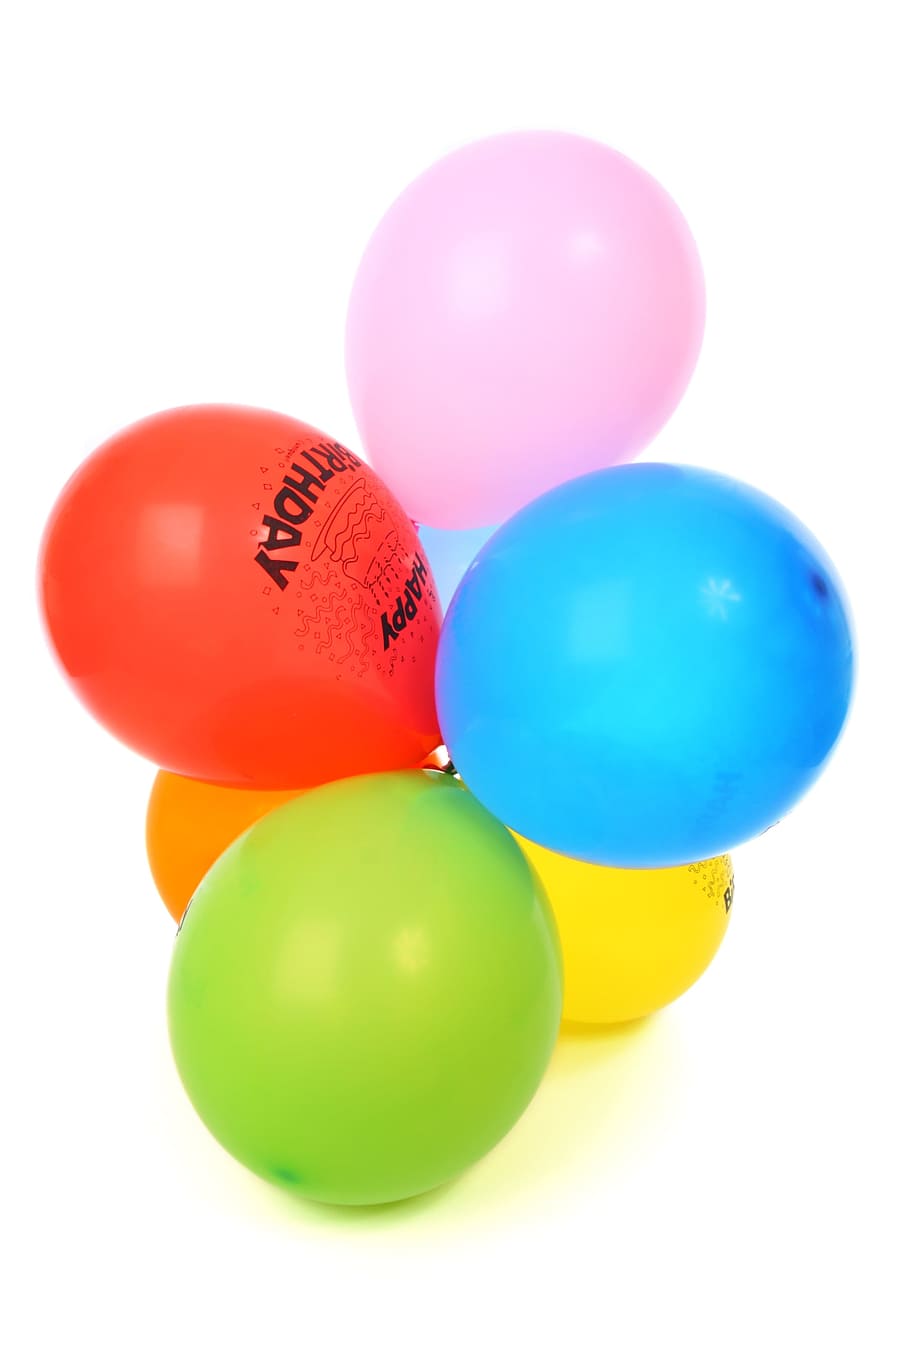 berbagai macam warna balon foto, udara, balon, ulang tahun, cerah, gelembung, perayaan, warna-warni, kesenangan, acara